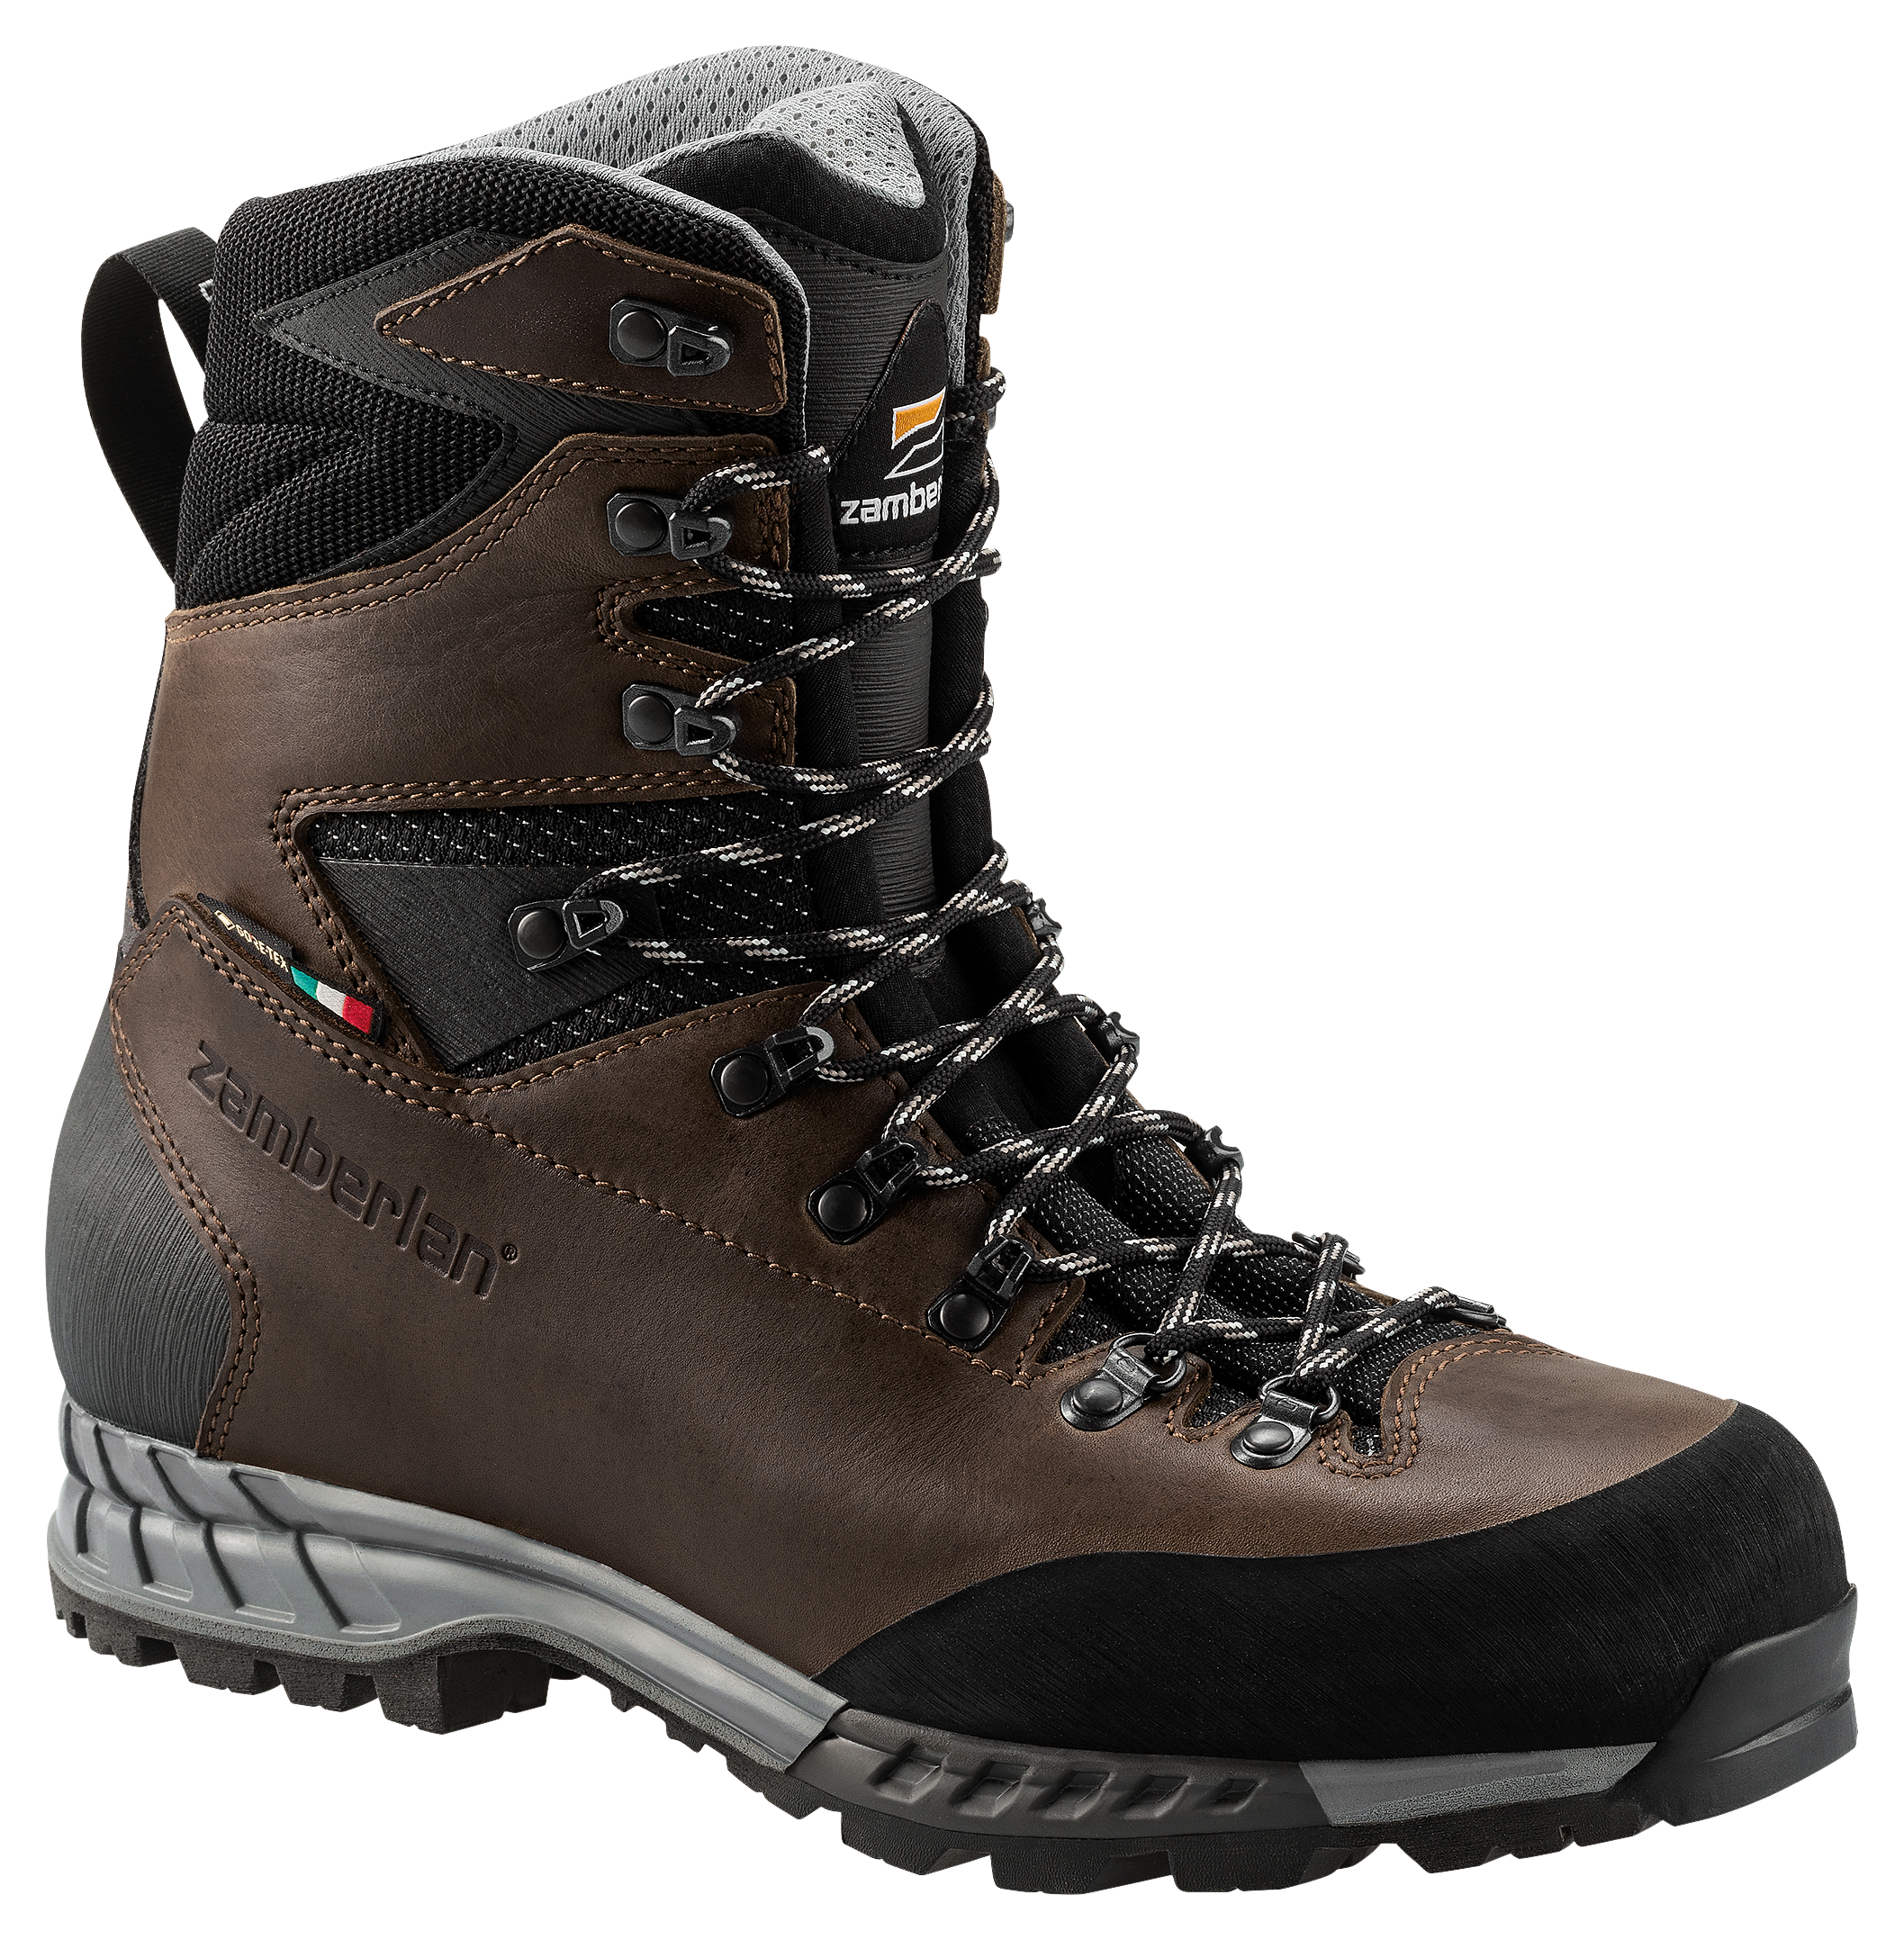 Zamberlan Cresta Alta GTX RR Hunting Boots for Men - Waxed Dark Brown - 9M